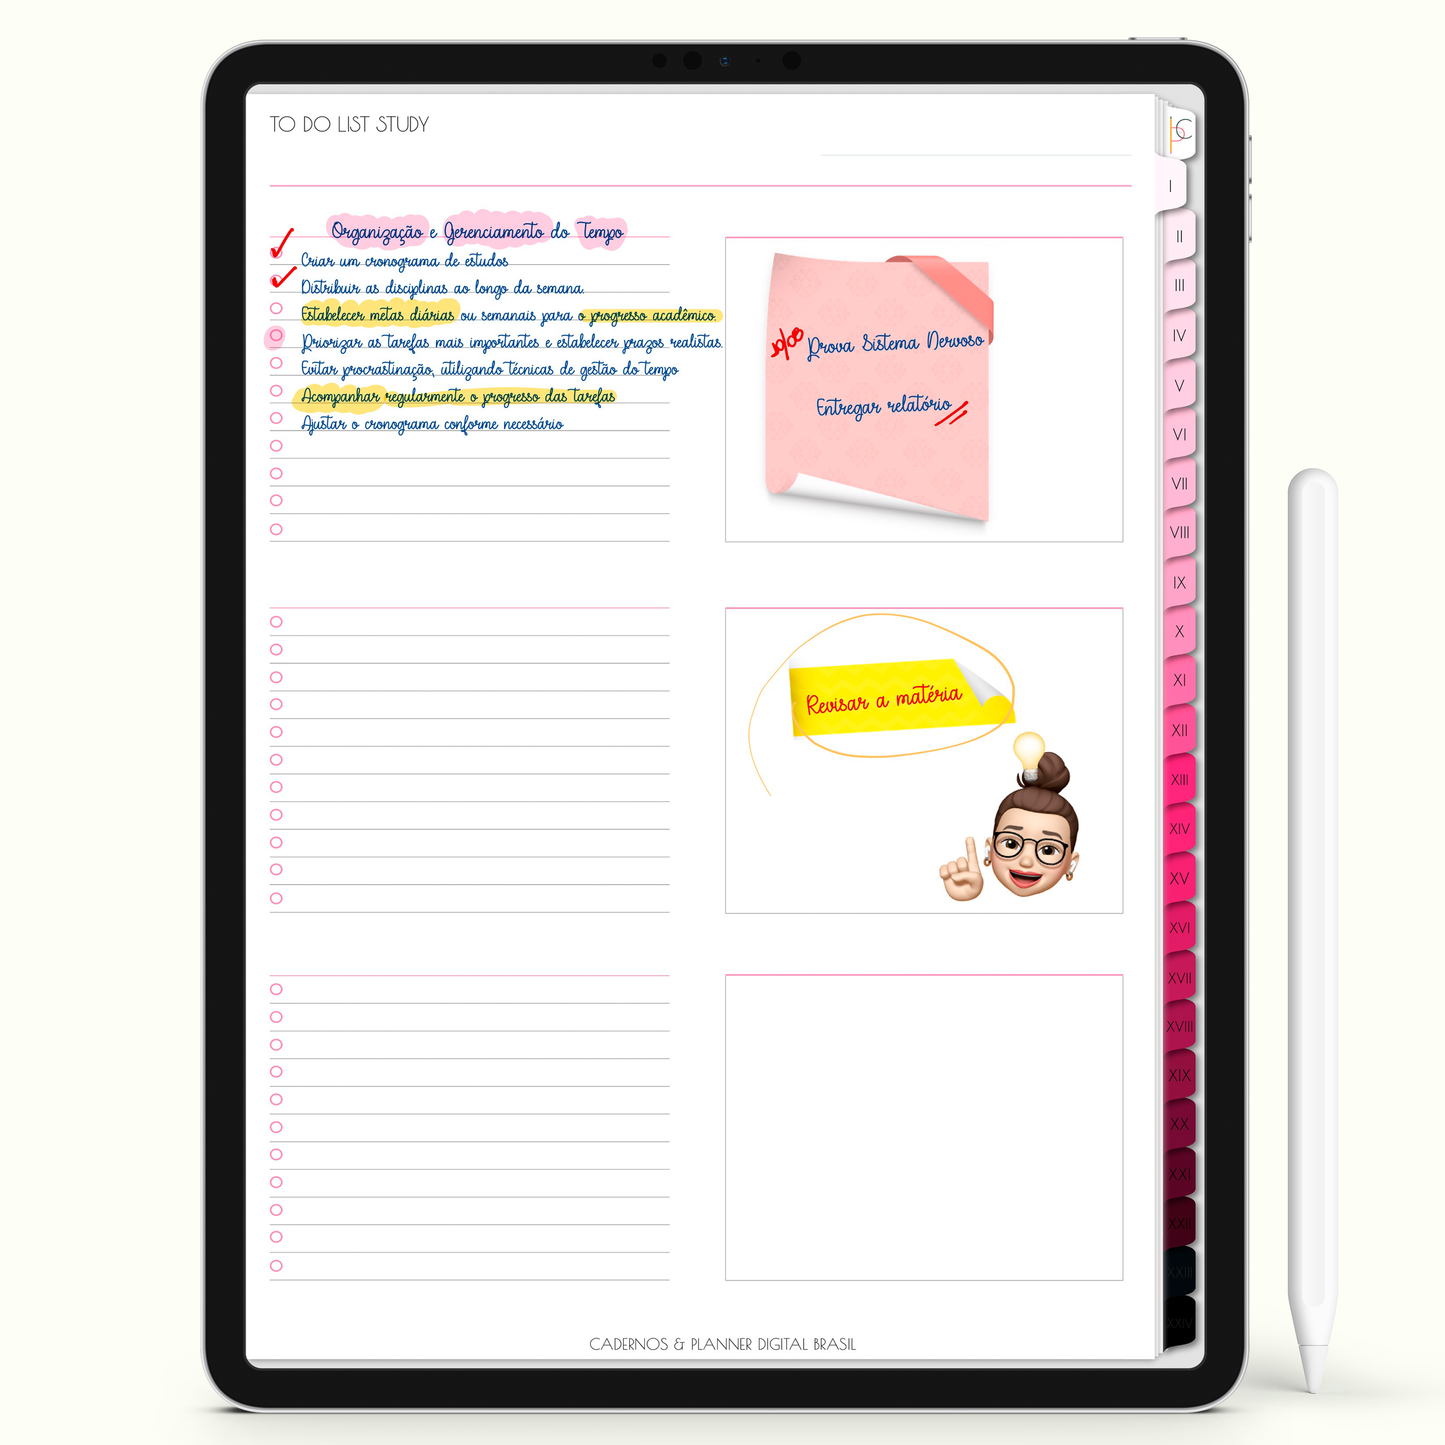 Caderno Digital Blush 24 Matérias - To Do List do Caderno Digital para iPad e Tablet Android. Cadernos & Planner Digital Brasil